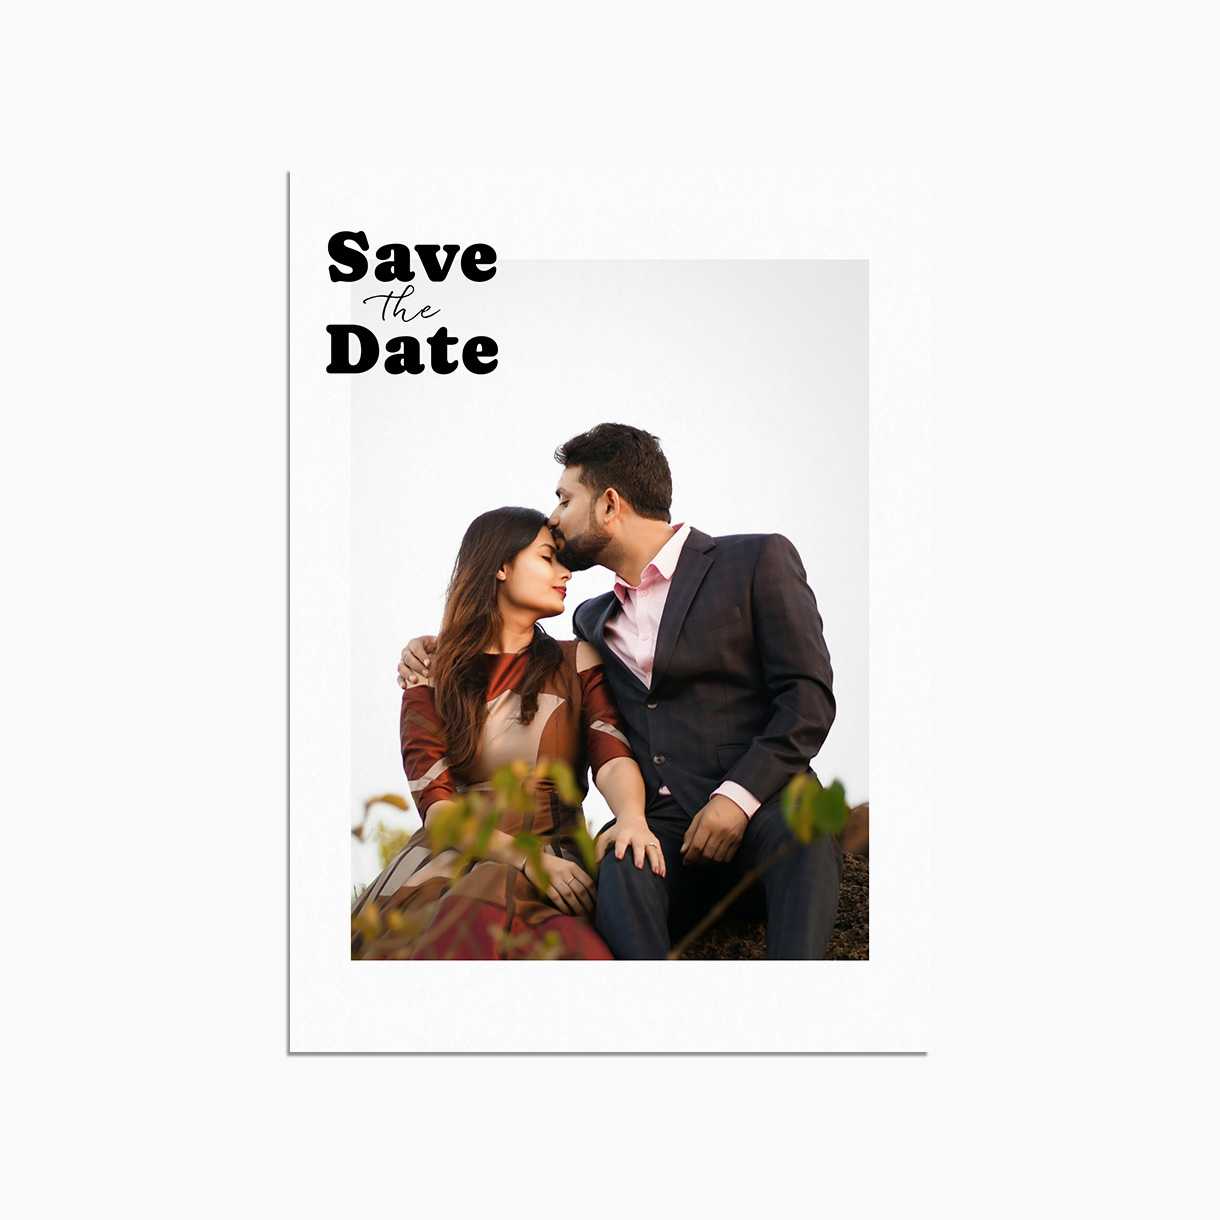 Save the Date wedding invitation card showcasing 